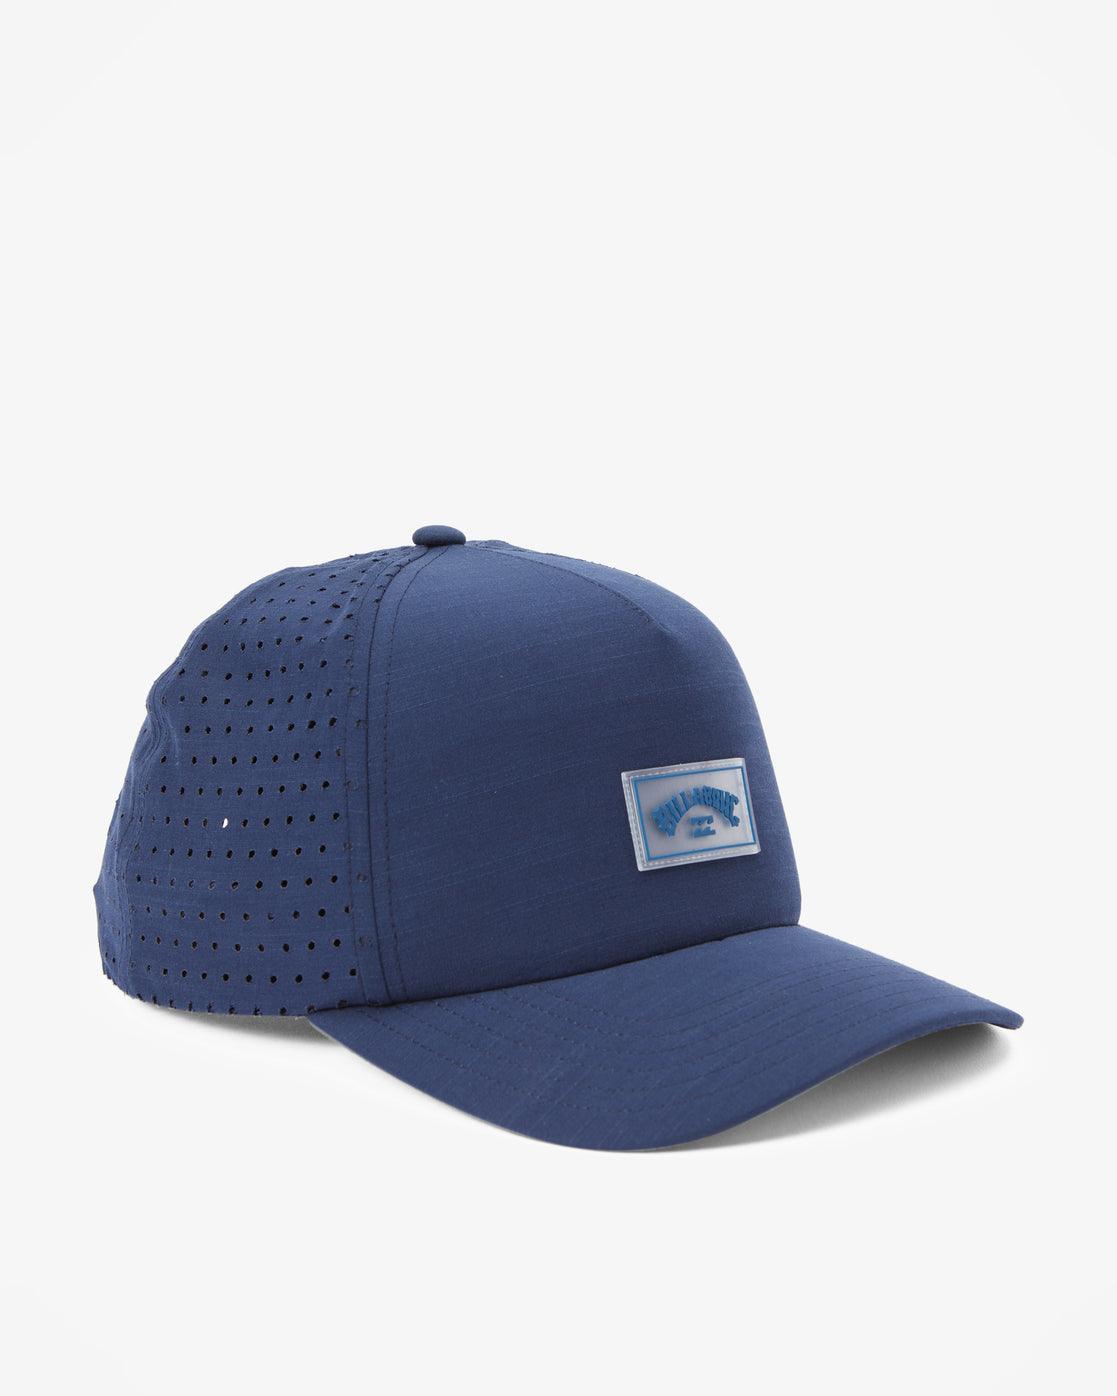 Newport Trucker Hat - SoHa Surf Shop